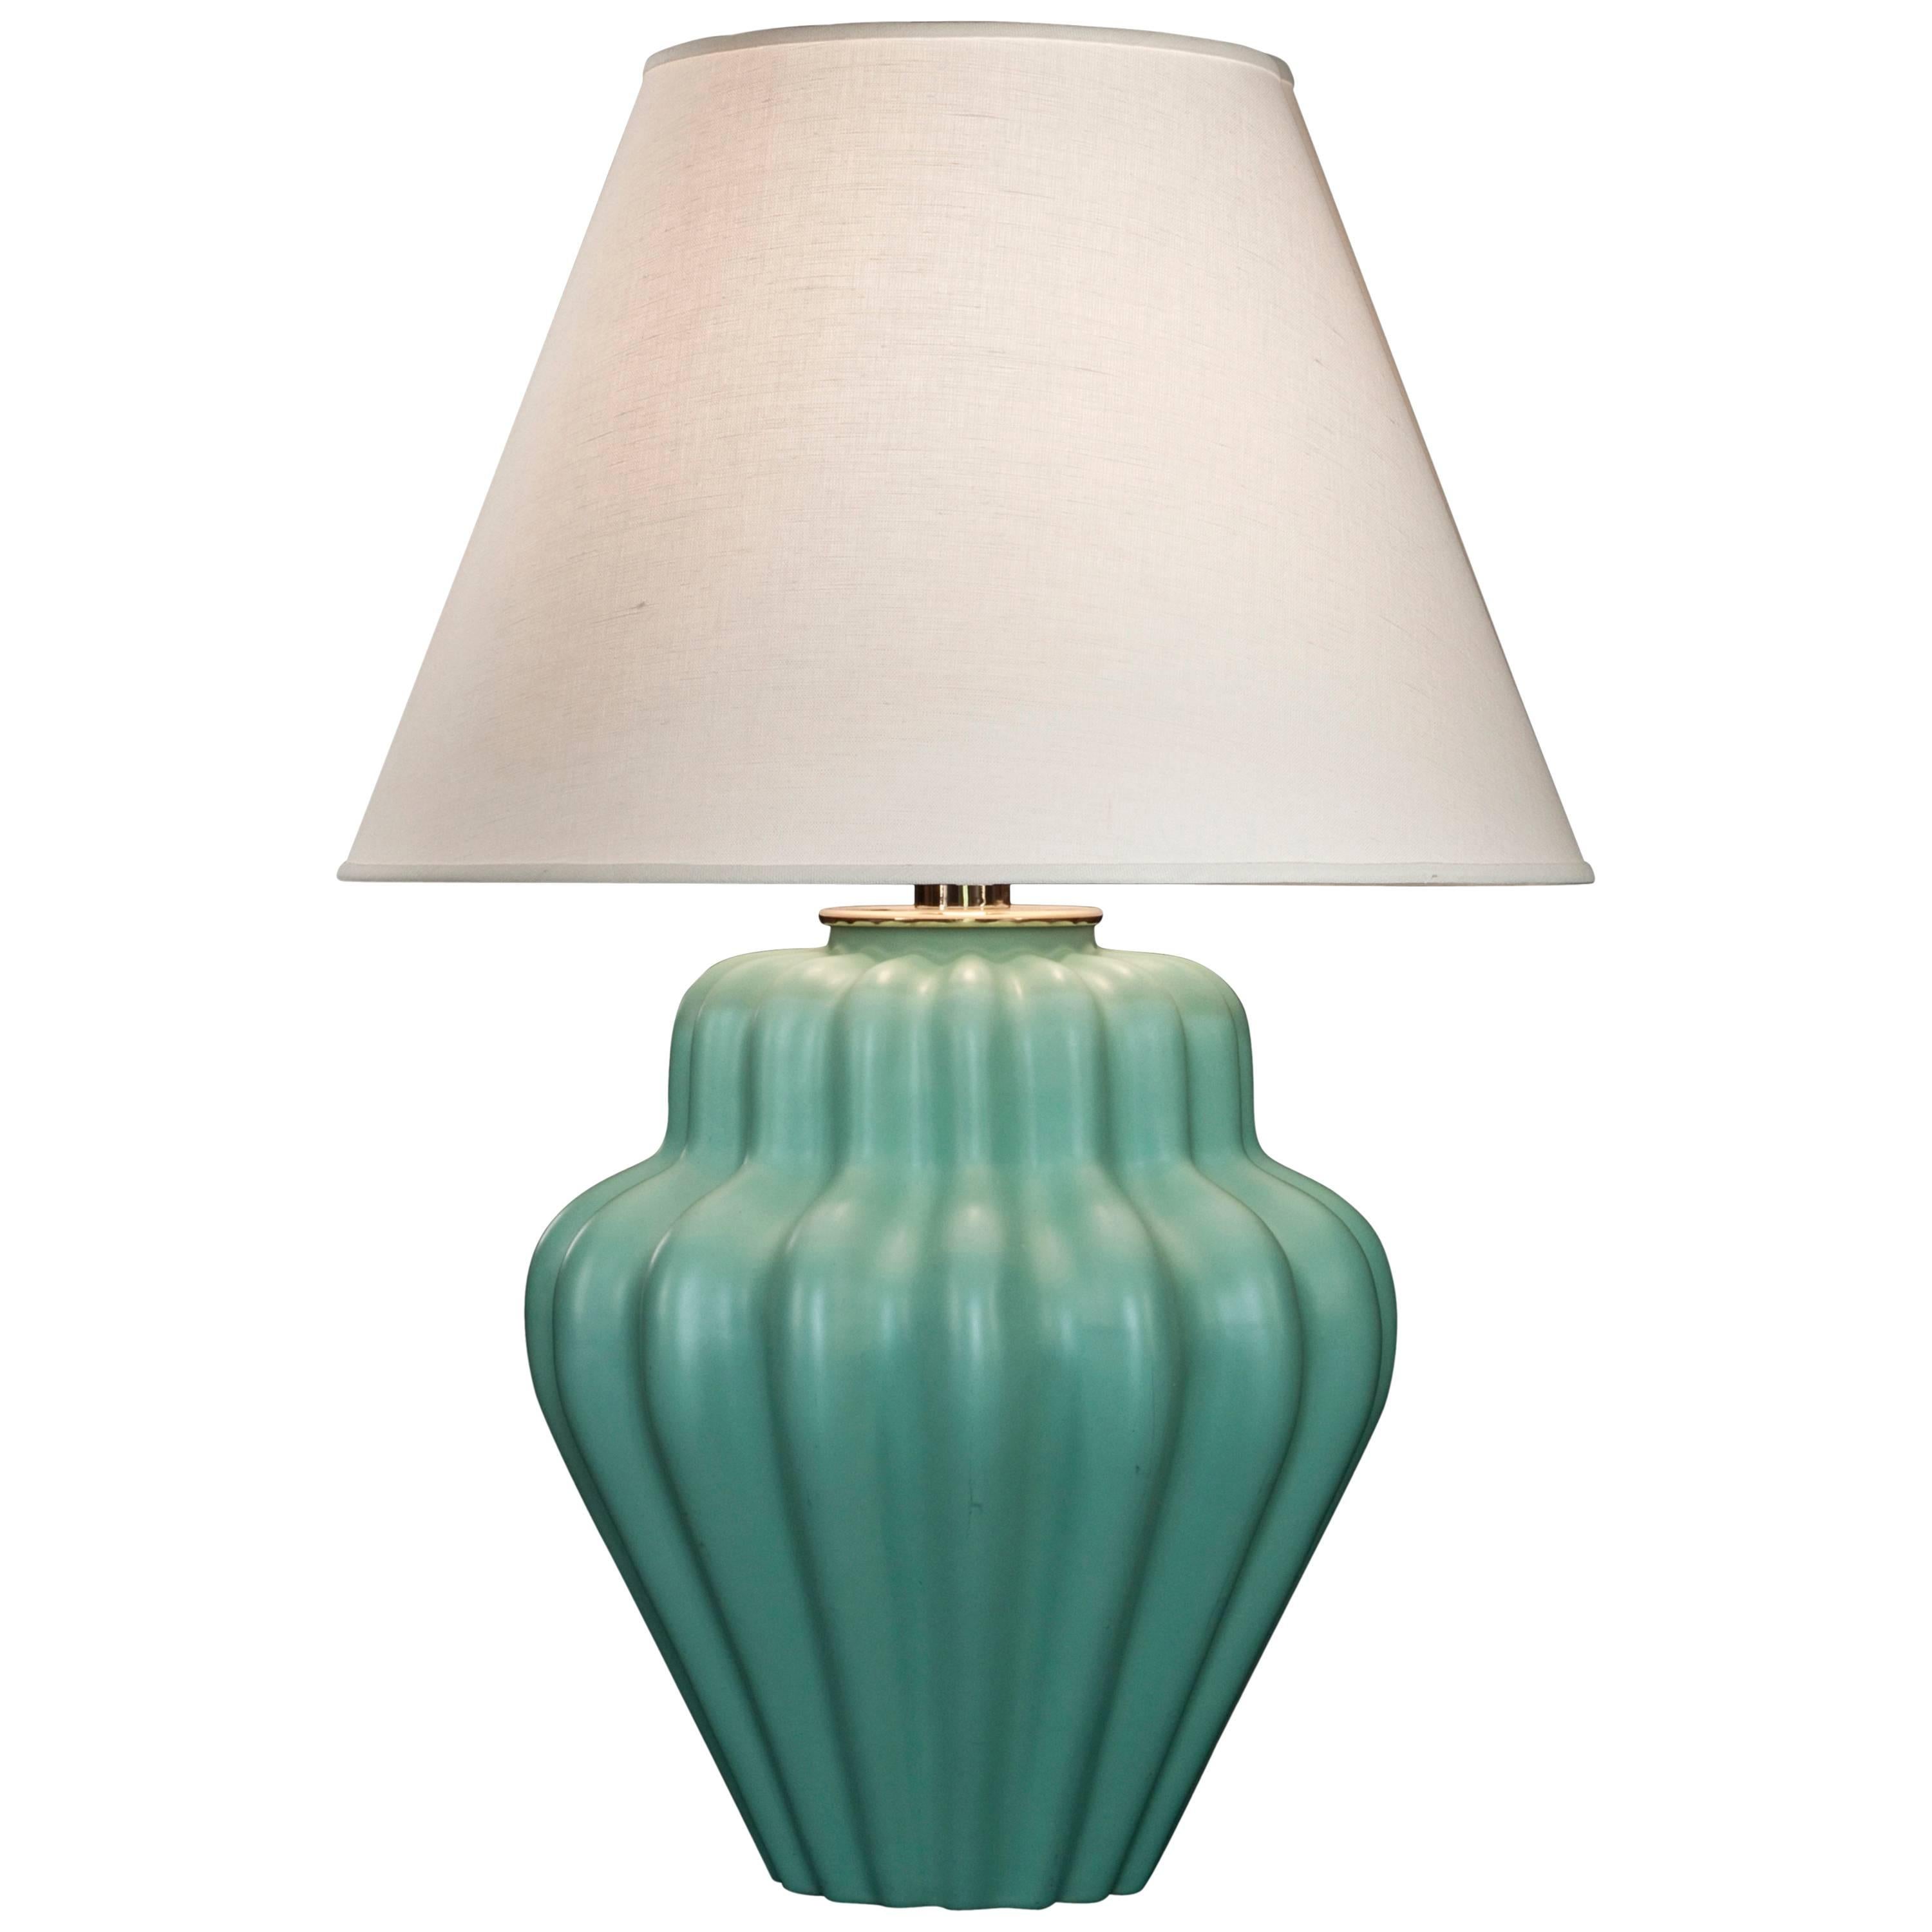 Ewald Dahlskog for Bo Fajans, Large Swedish Ceramic Vase, Now a Lamp For Sale